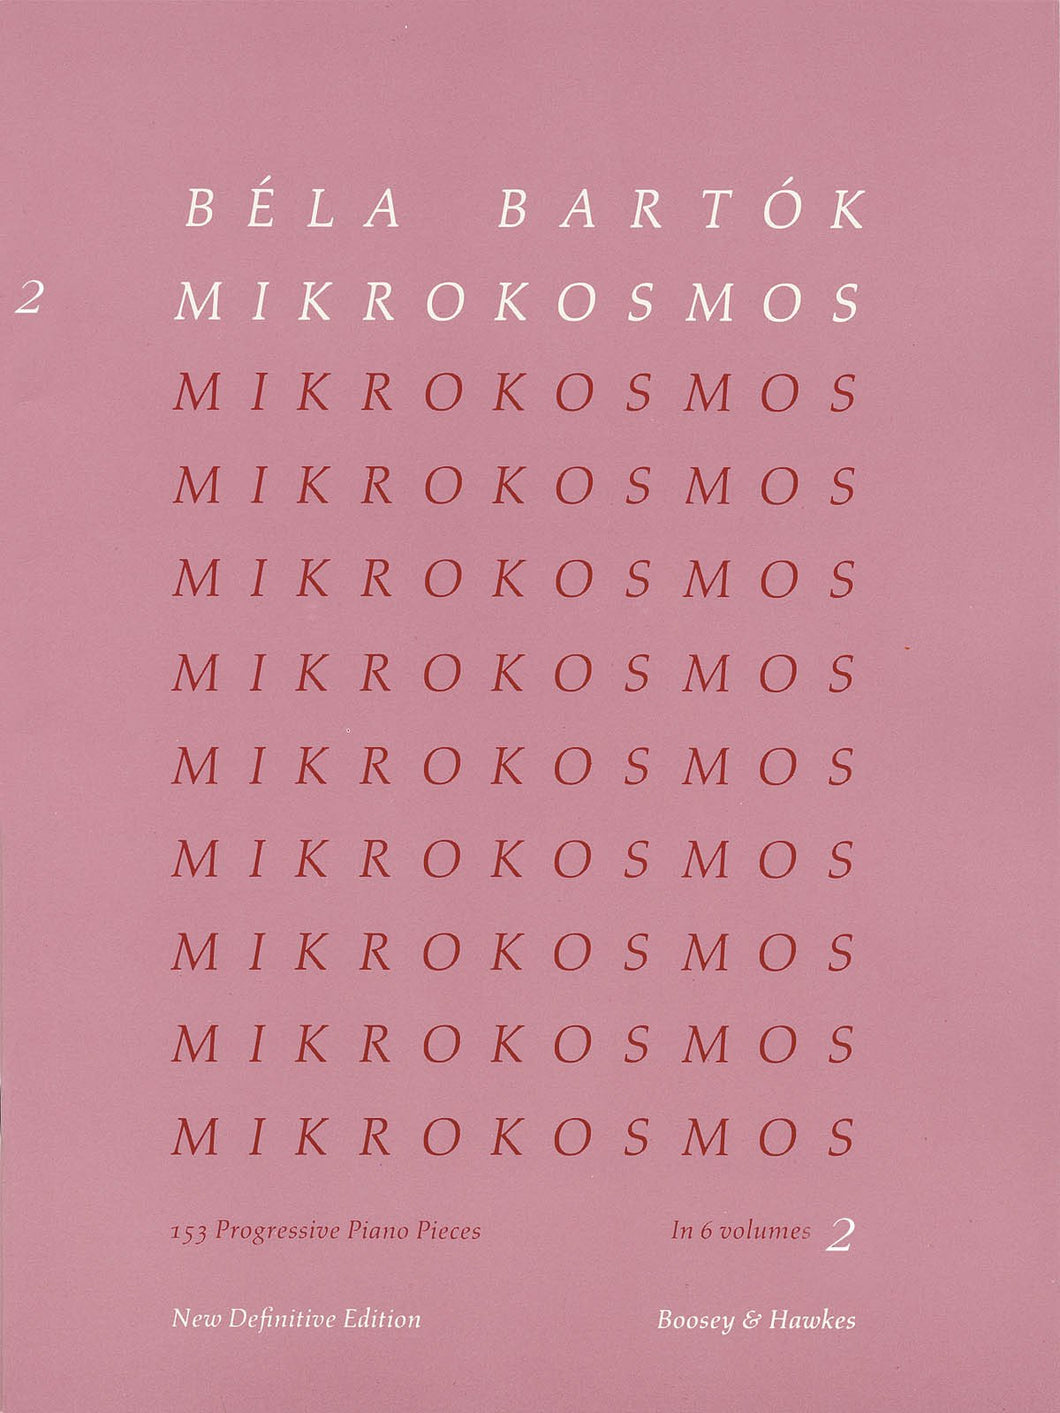 Béla Bartók Mikrokosmos 2 Definitive Edition